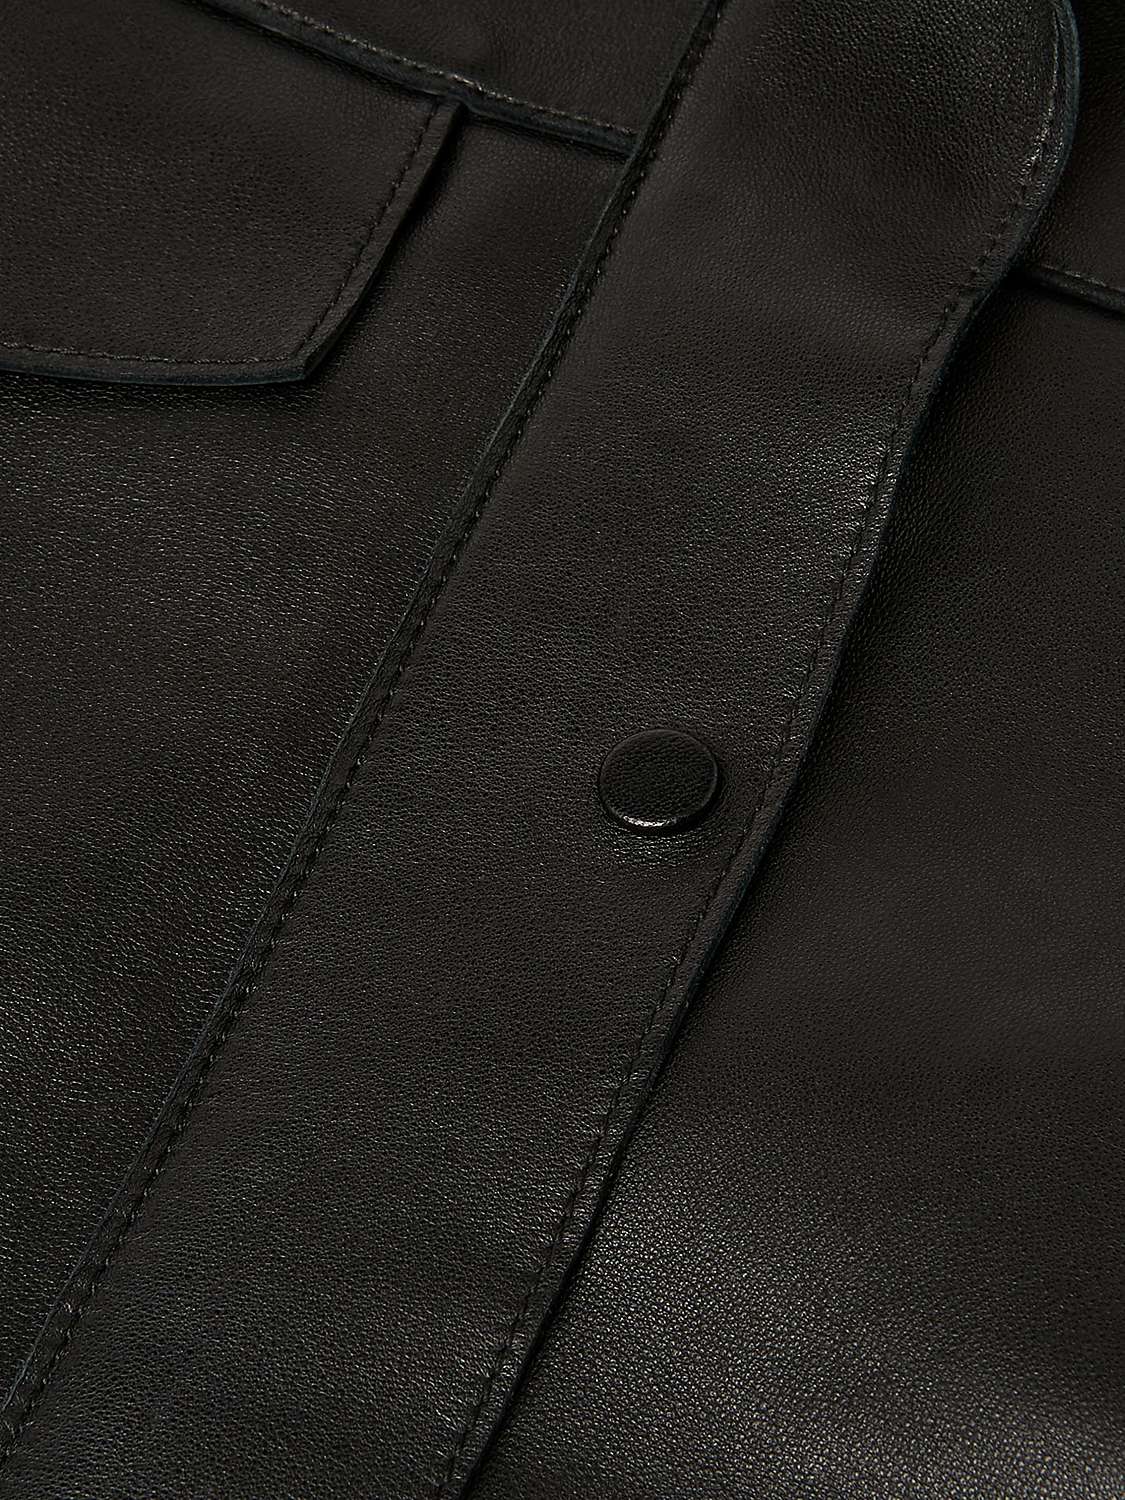 Buy Whistles Clean Bonded Leather Jacket, Black Online at johnlewis.com